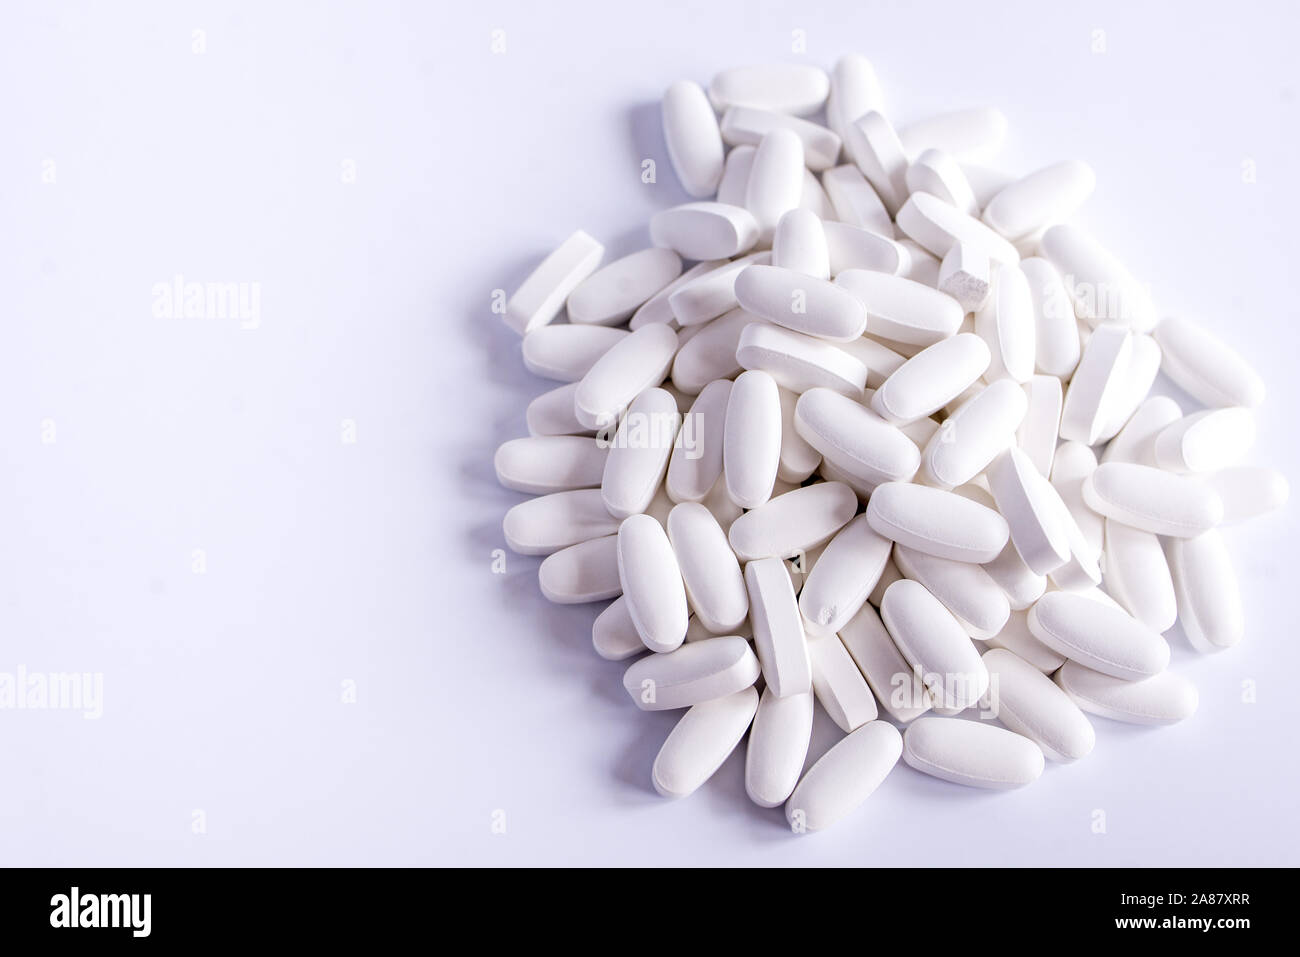 white pills on black background Stock Photo